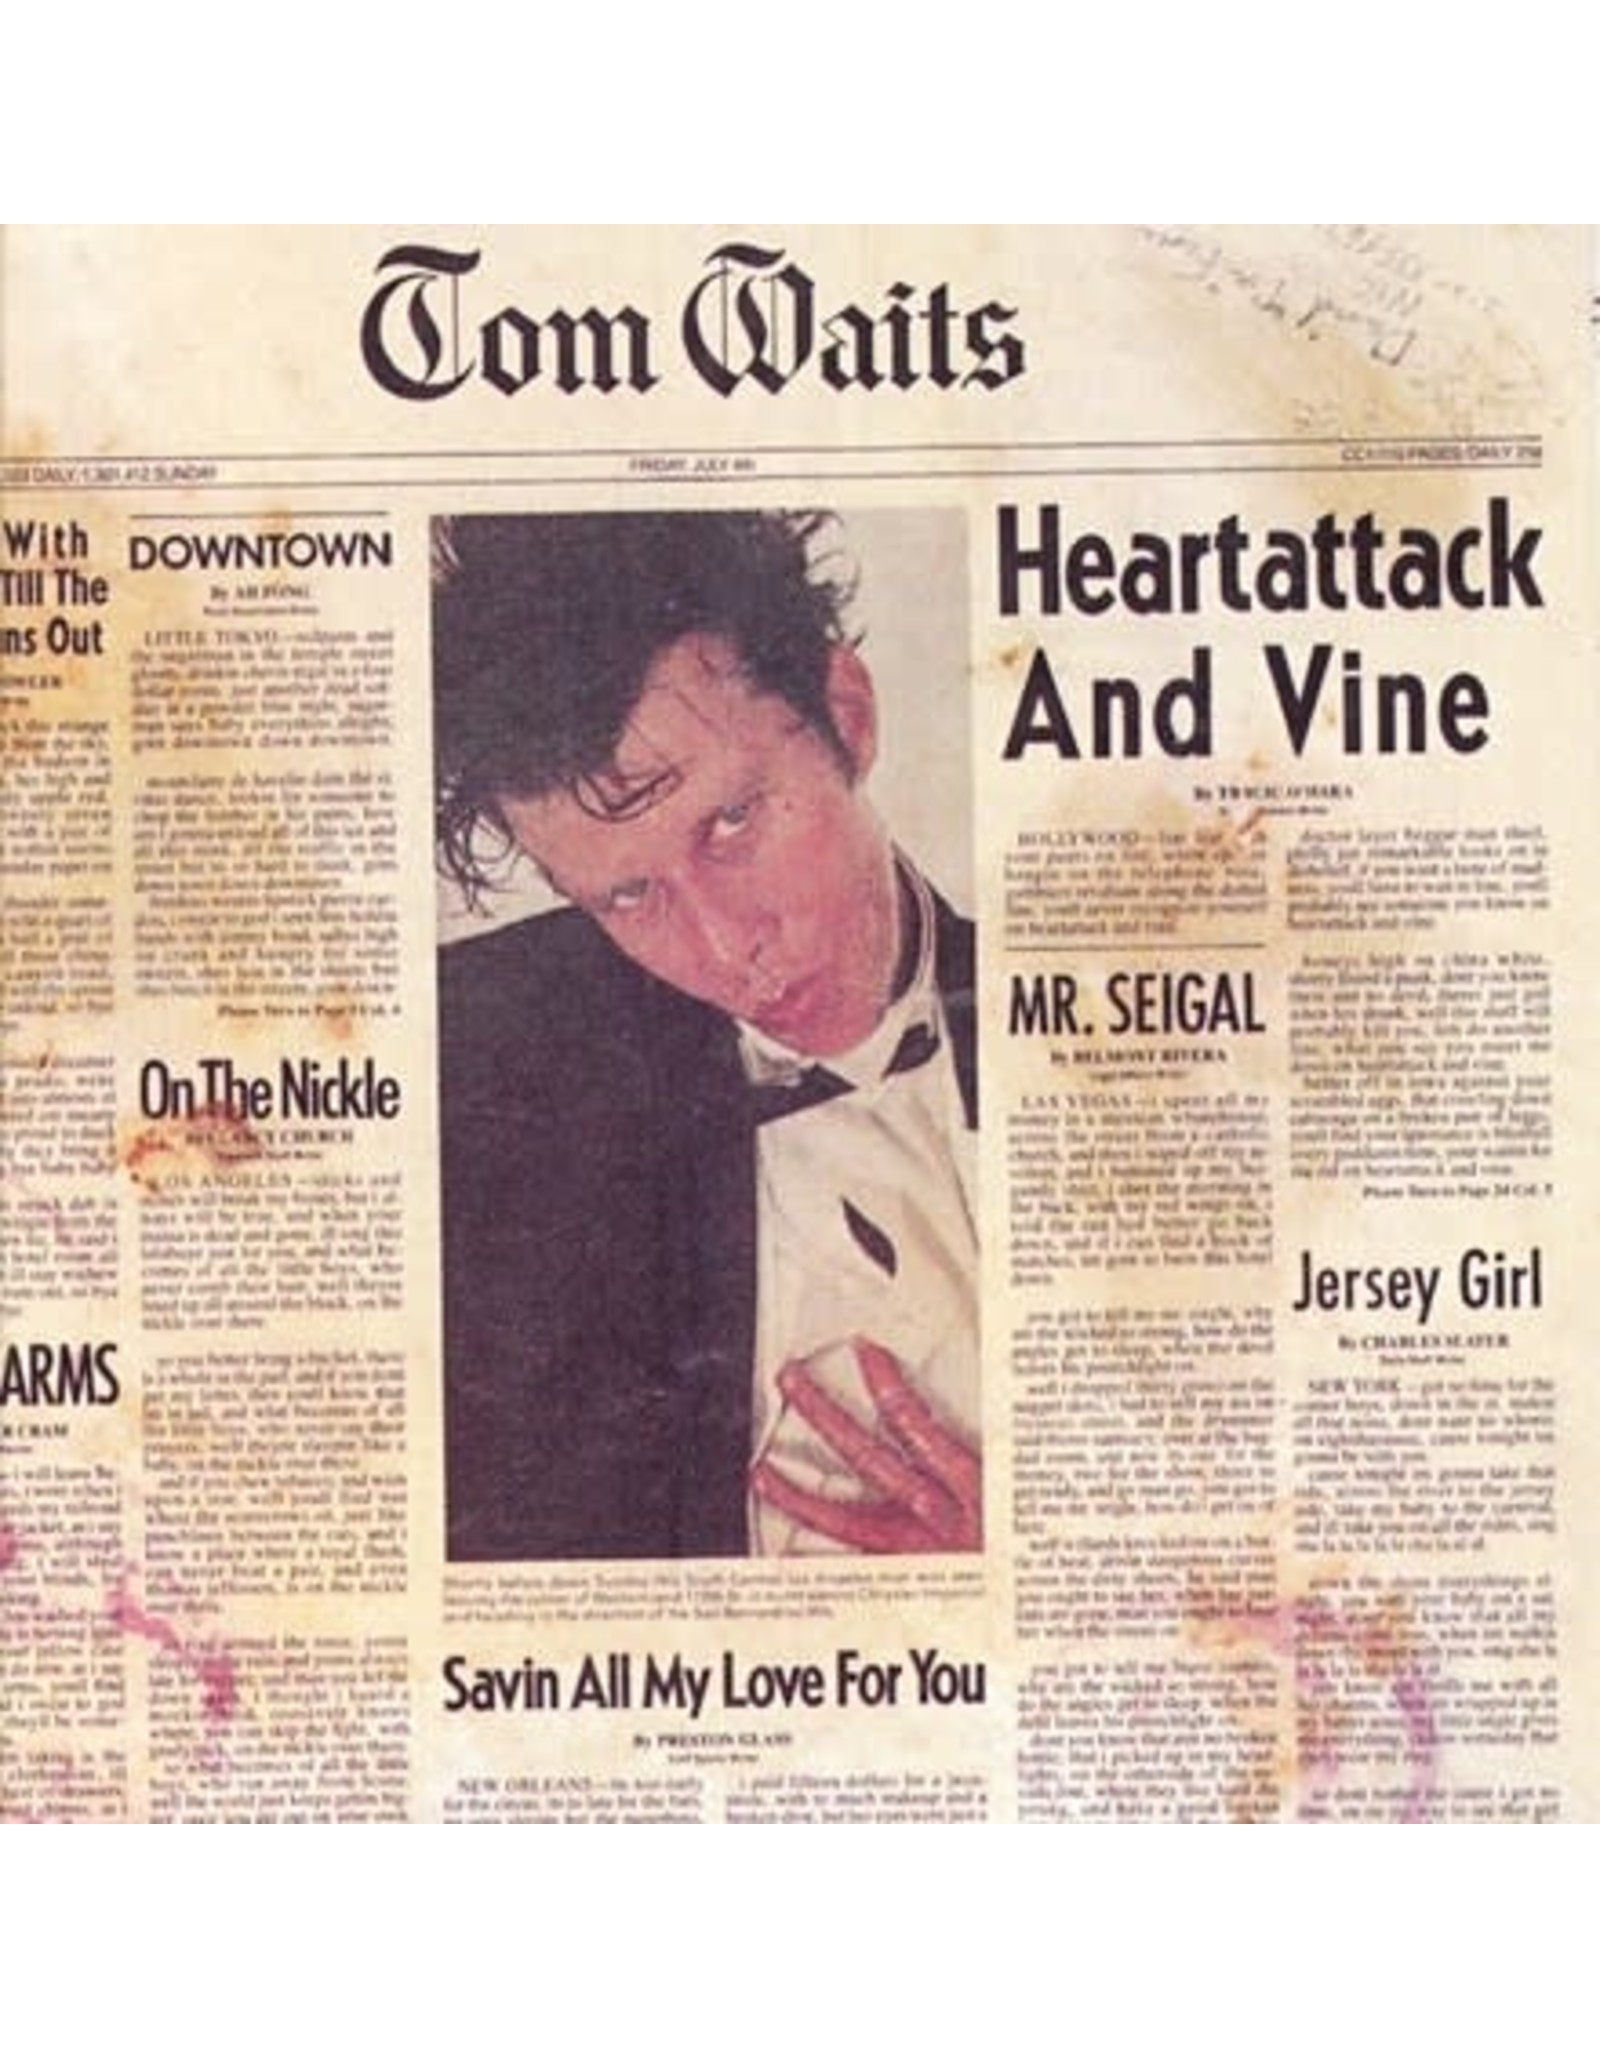 Anti Waits, Tom: Heartattack and Vine LP